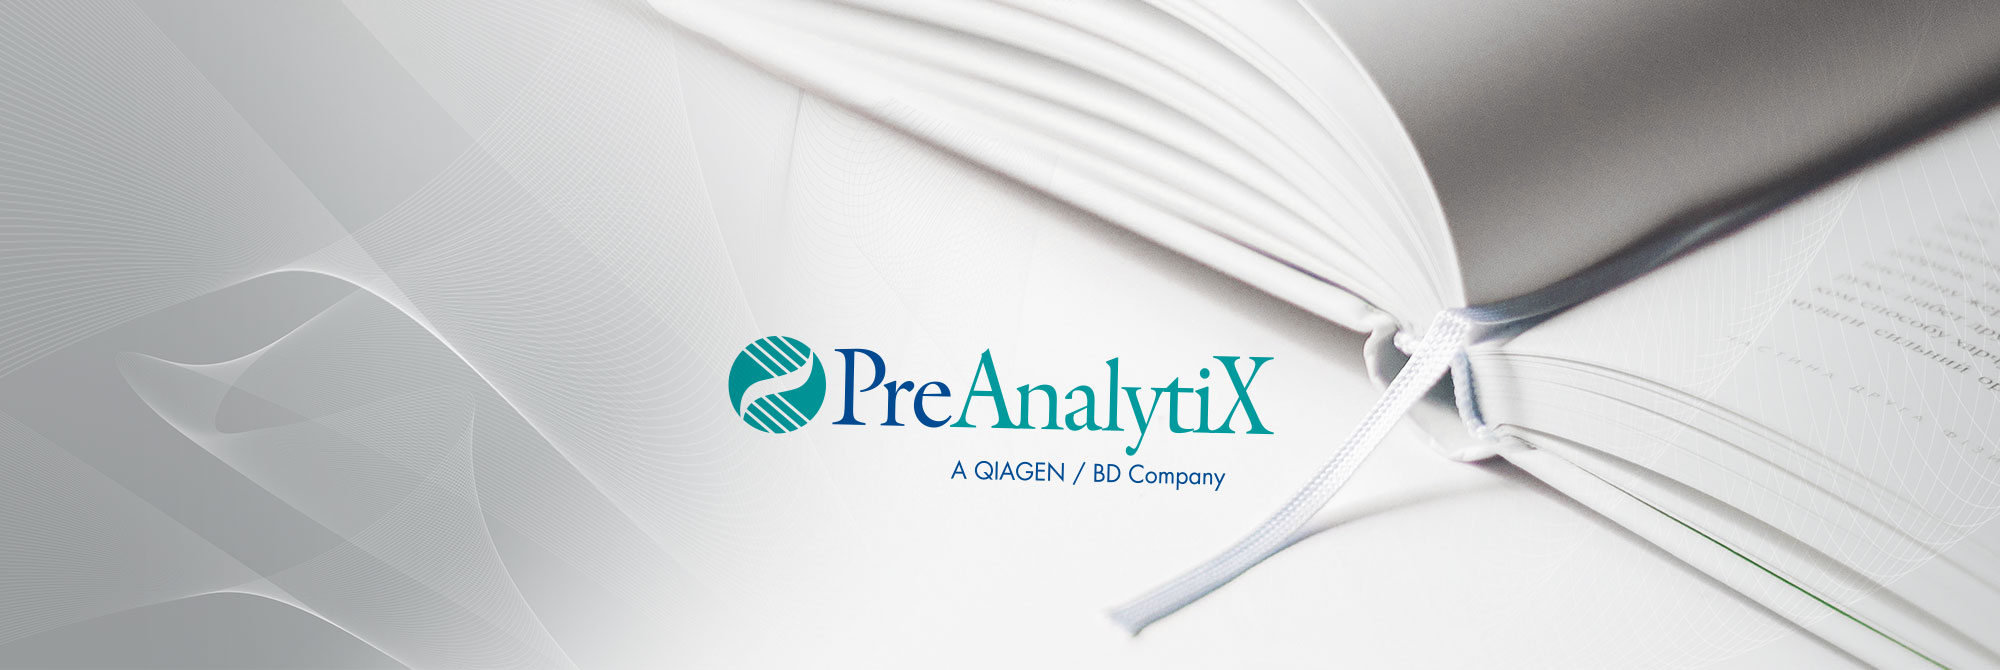 PreAnalytiX trademark